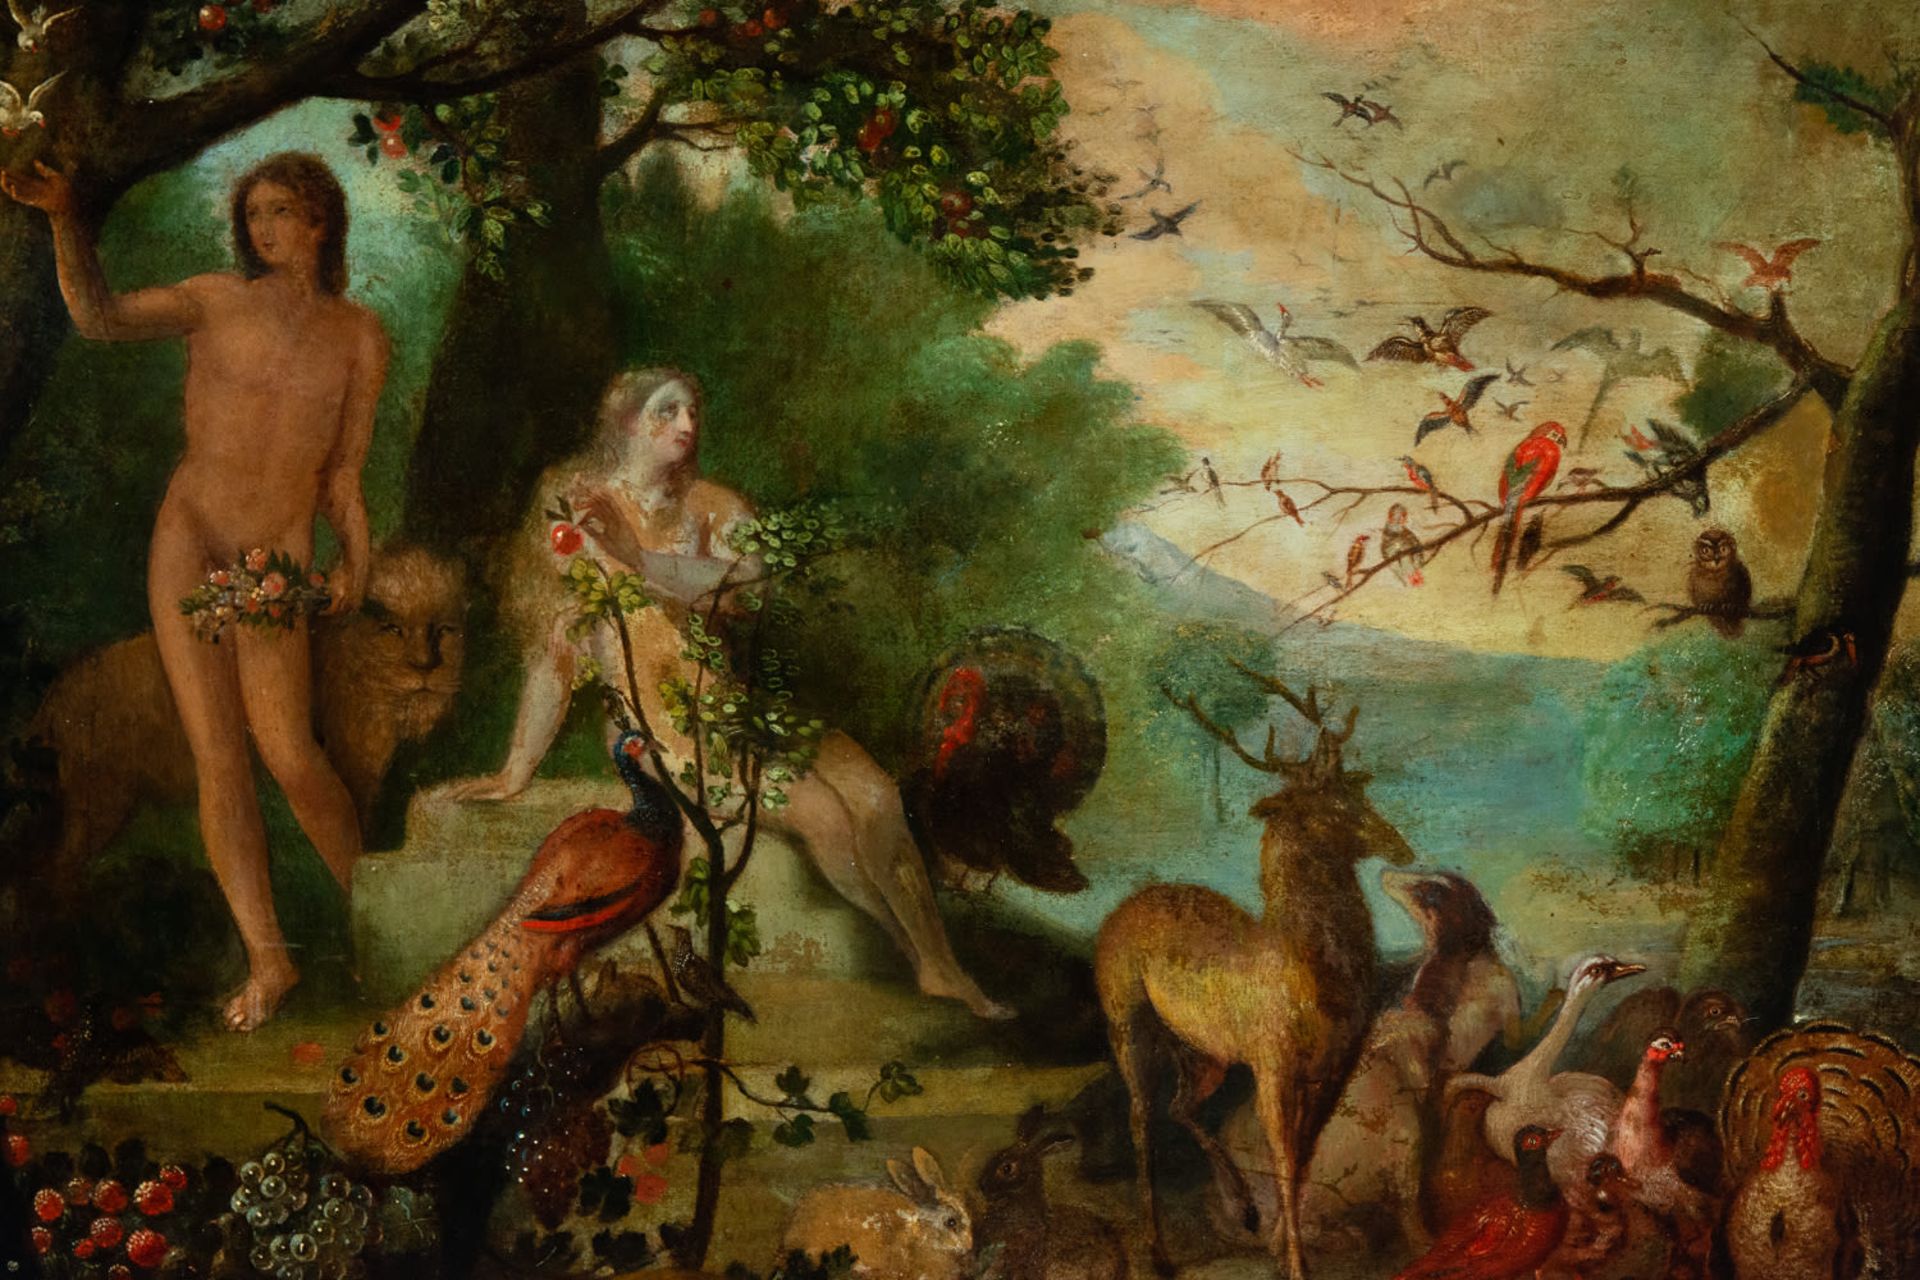 The Garden of Eden, 18th century Flemish school - Image 2 of 6